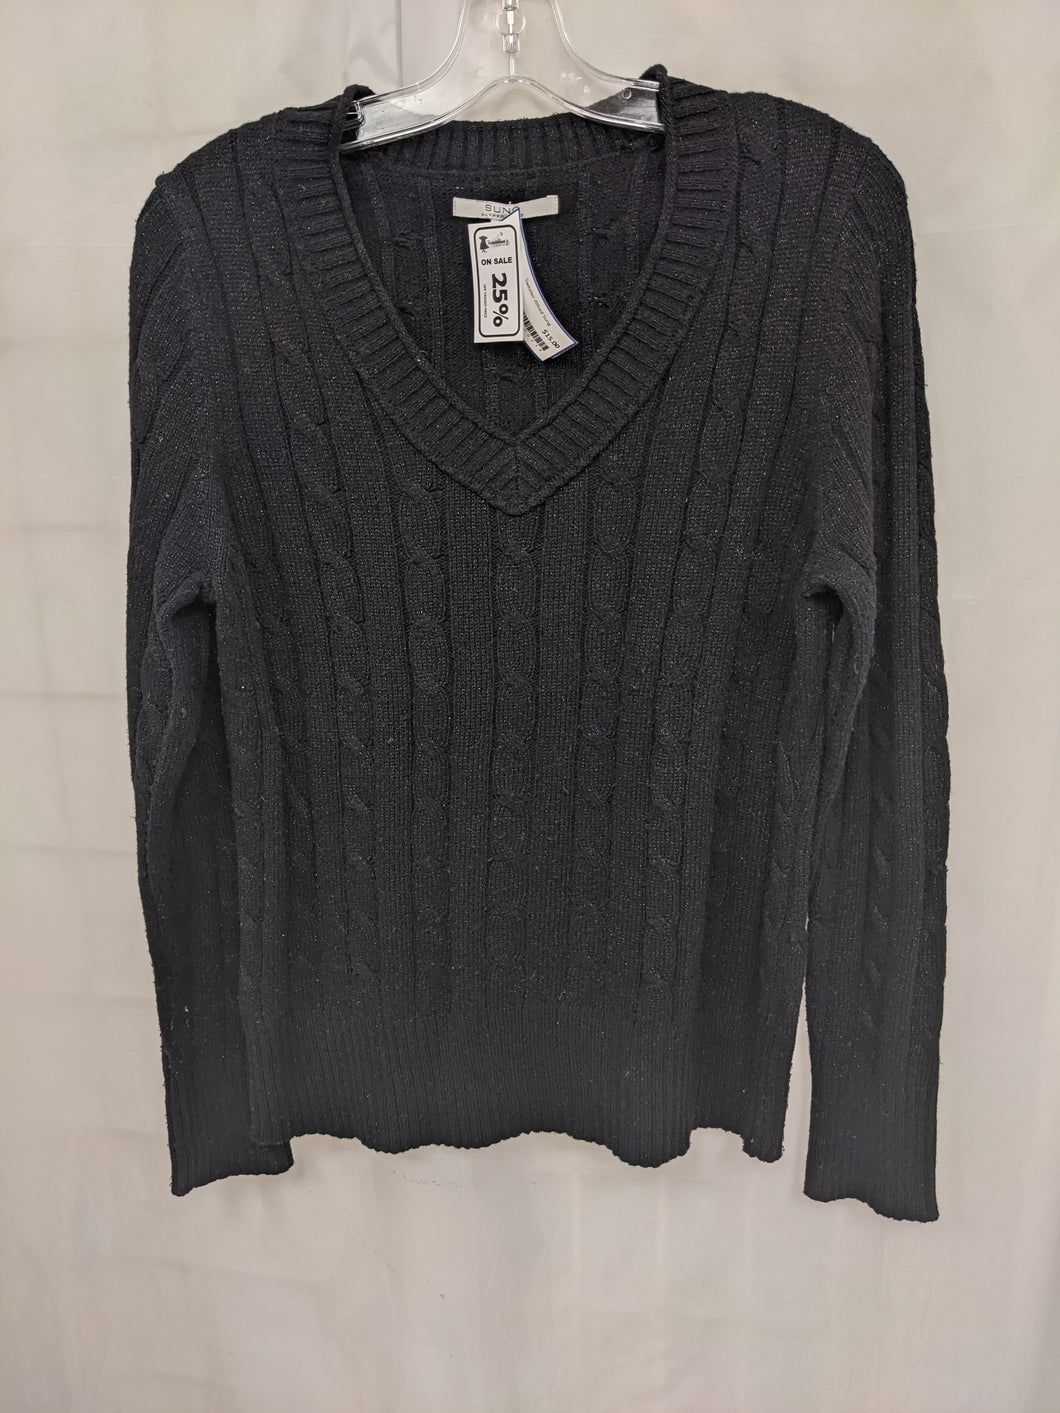 Sweater - Size XL